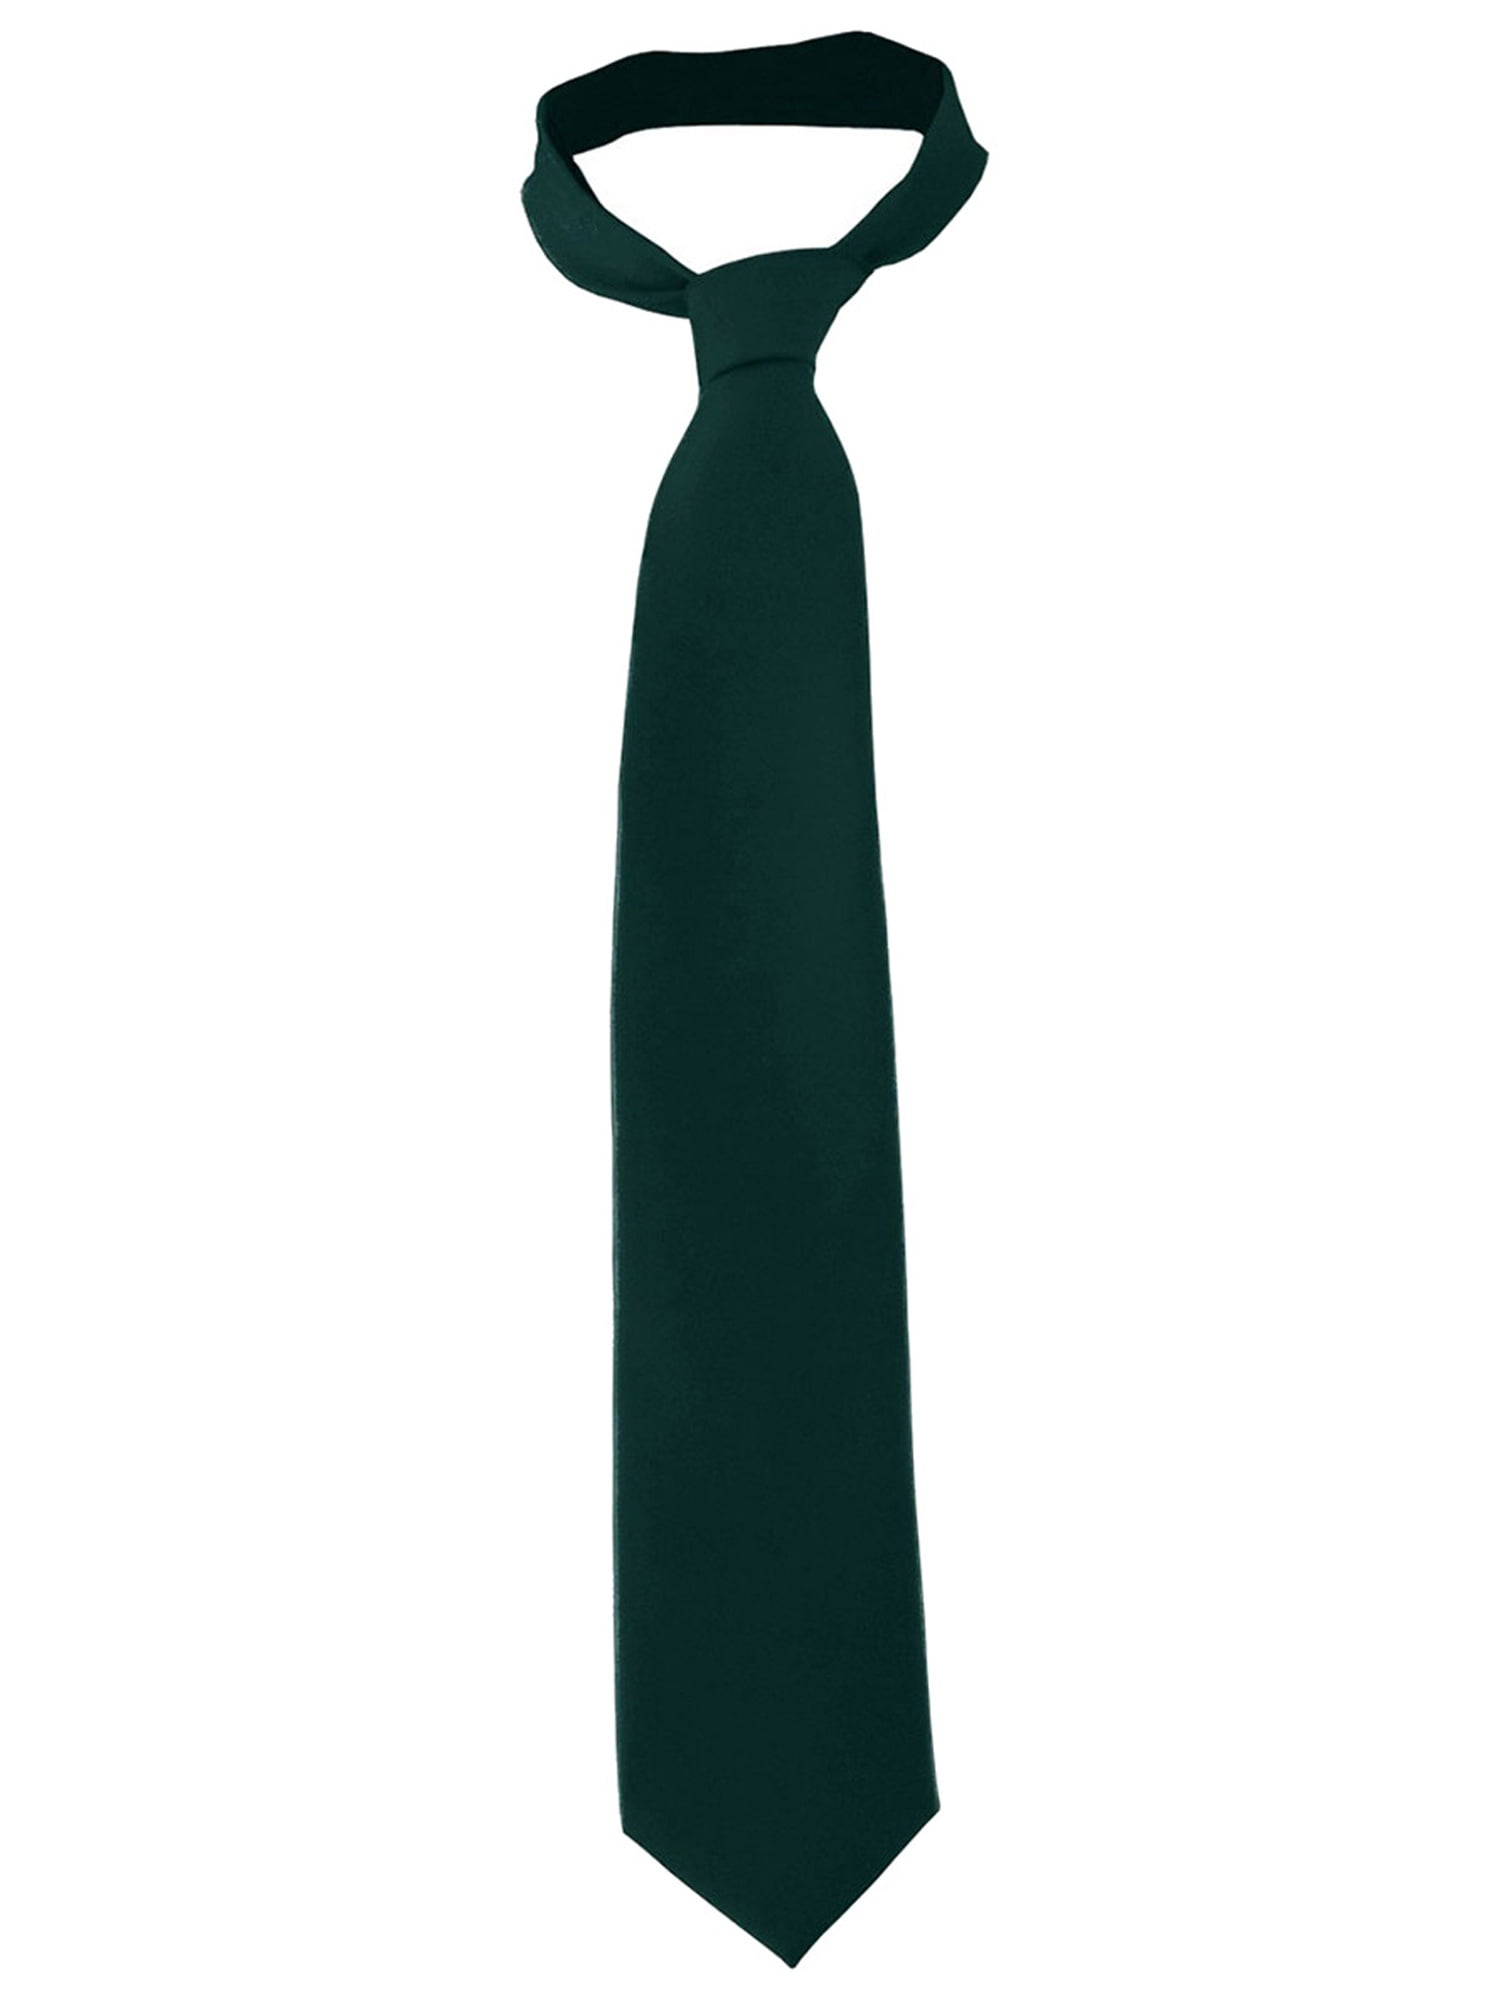 Light Up Tie Bow Tie AI790 Fun Central Costume Acc 1 pc Blue LED Sequin Tie